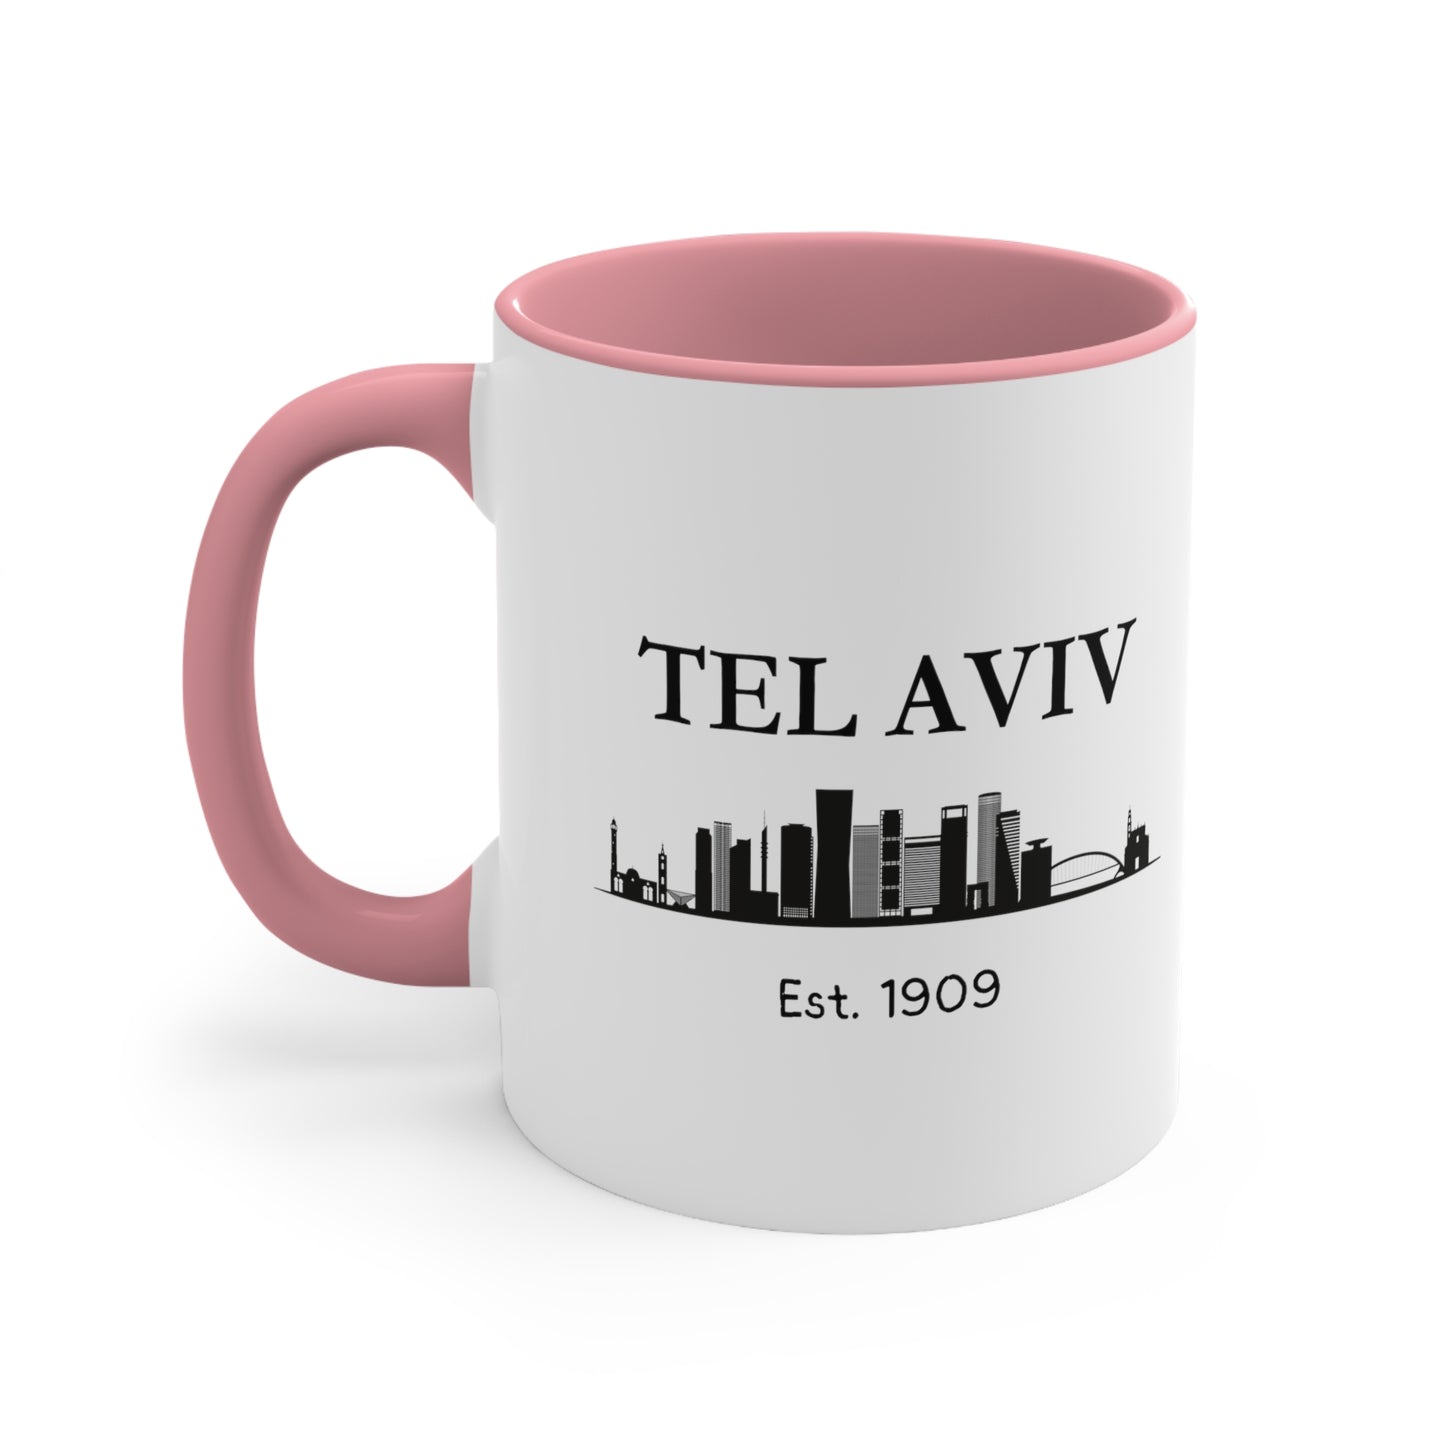 Tel Aviv - Est. 1909 - Accent Coffee Mug, 11oz